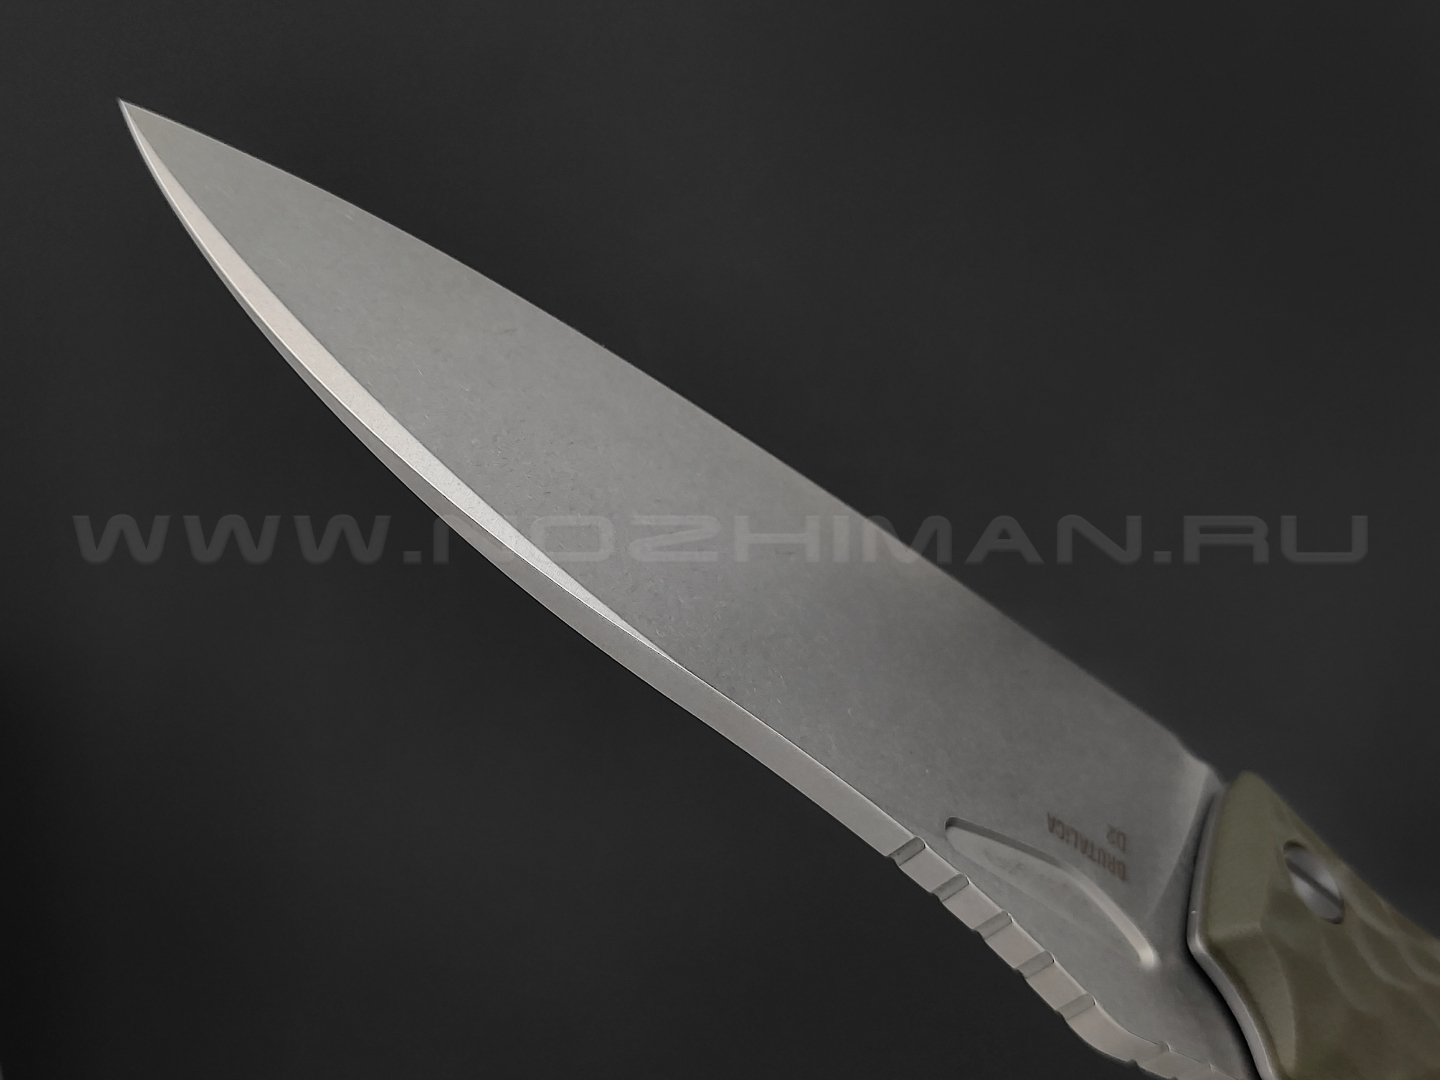 Brutalica нож Ponomar Folder, сталь D2 stonewash, рукоять G10 olive